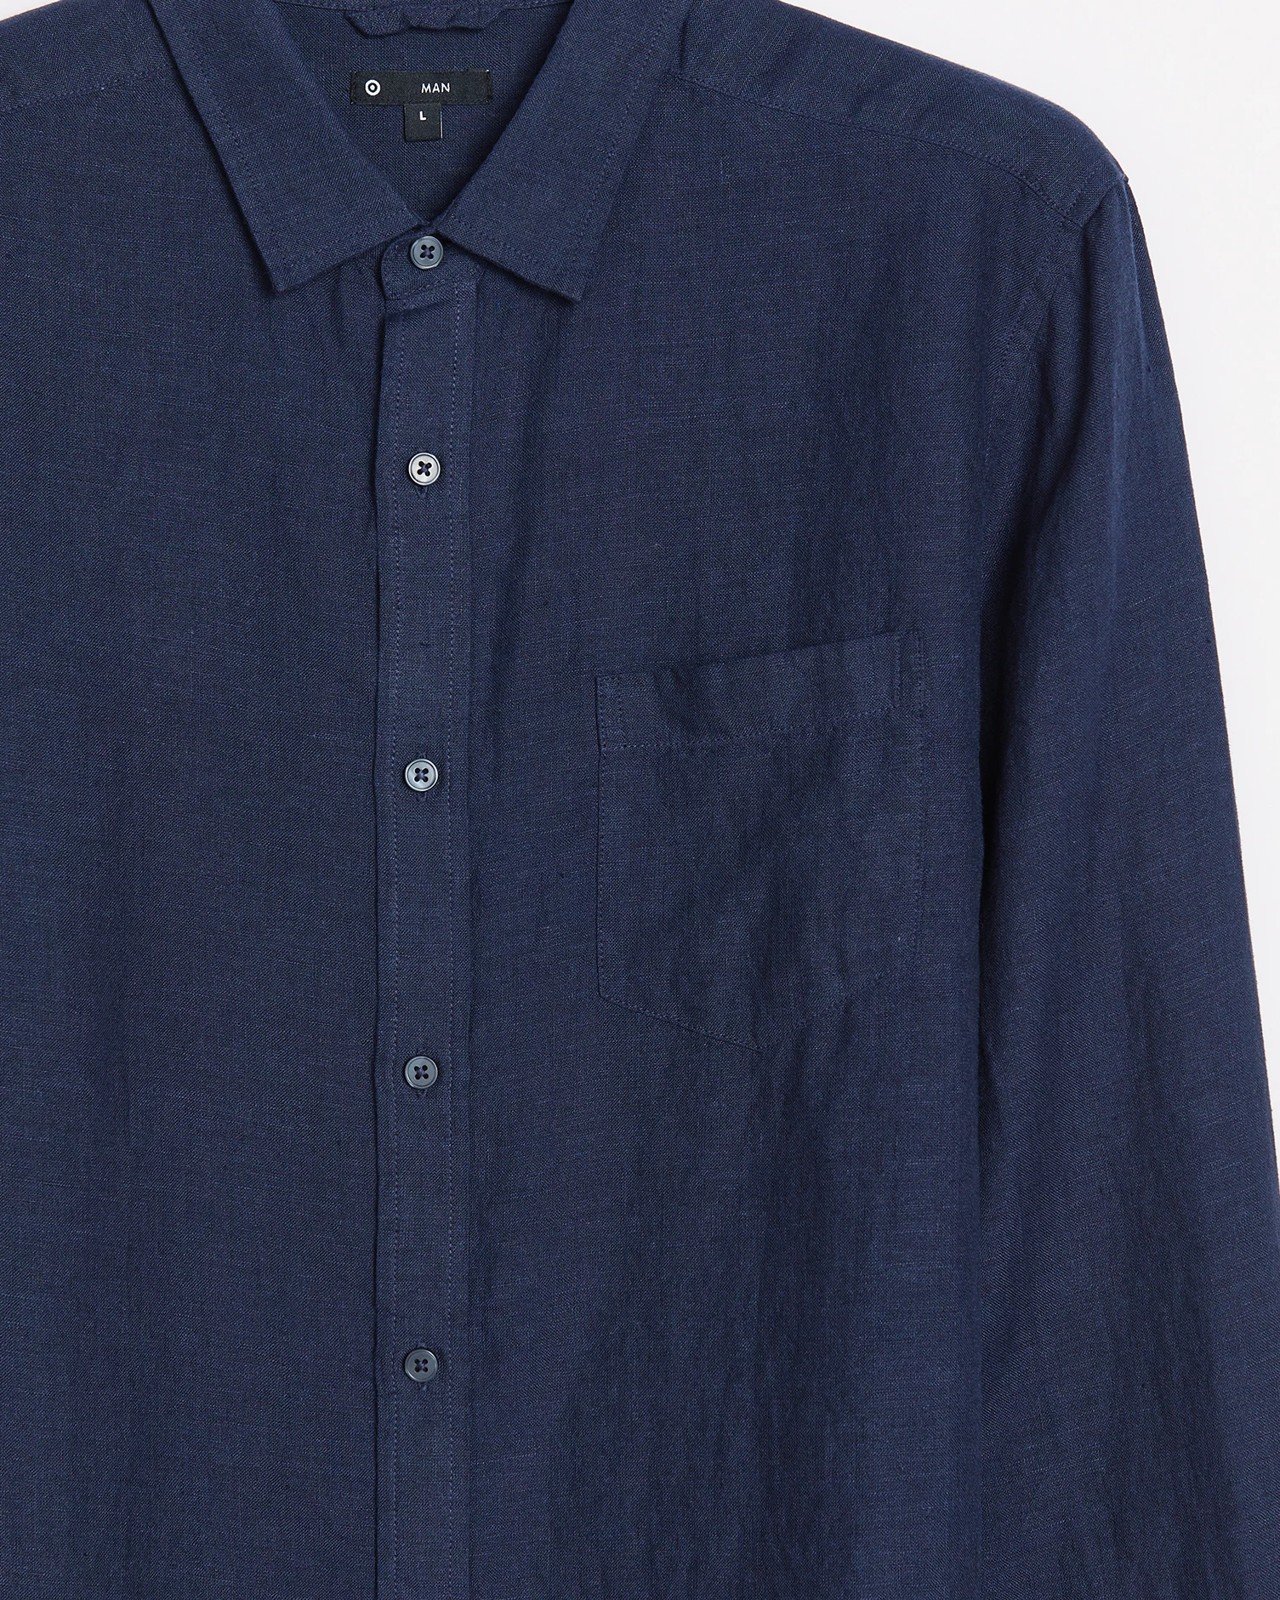 European Linen Long Sleeve Shirt in Stone Blue color